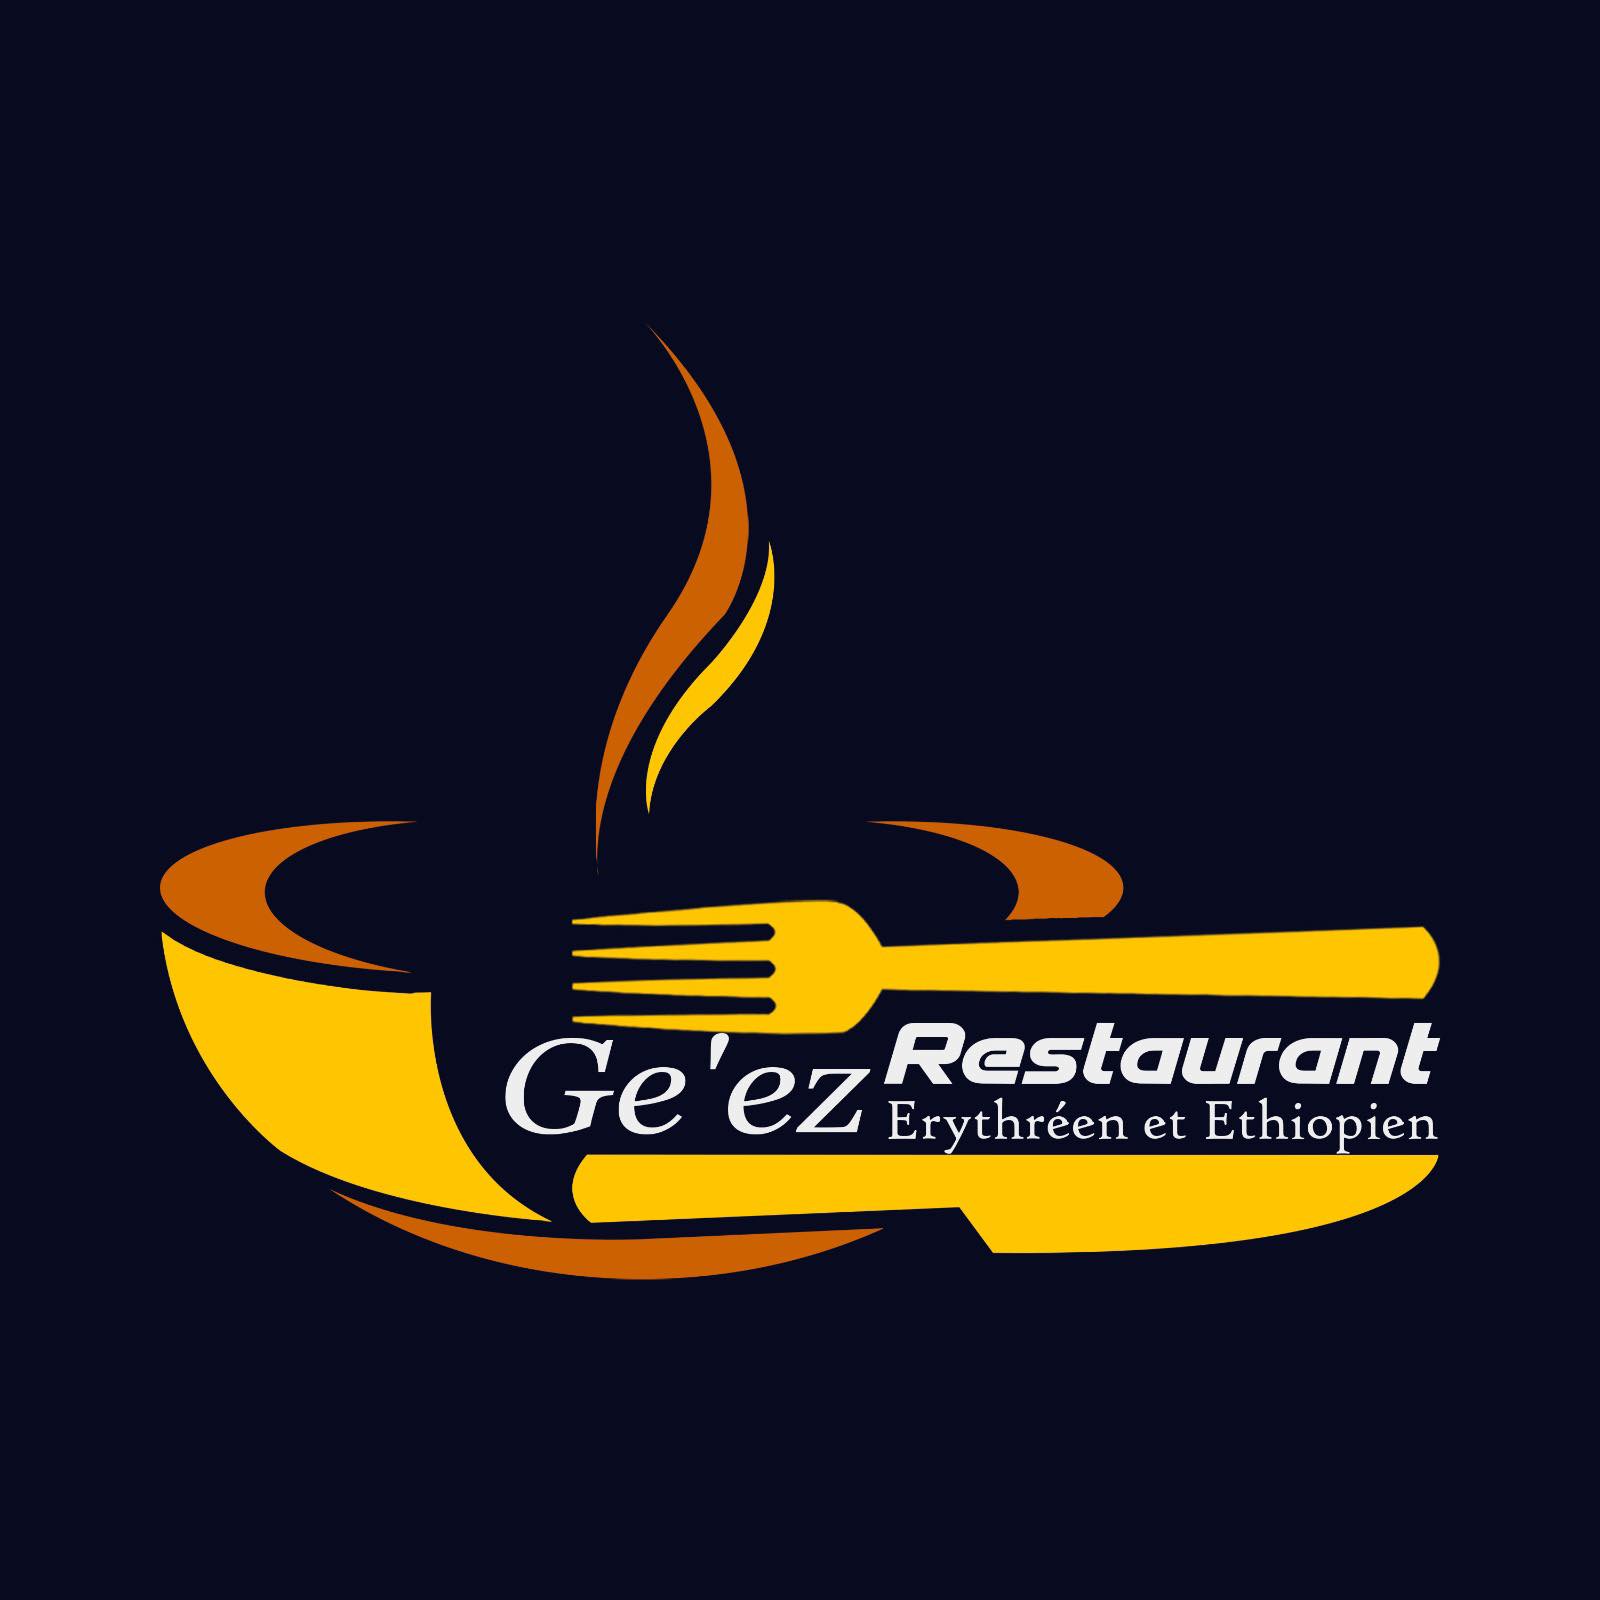 Ge`ez Restaurant érythréen